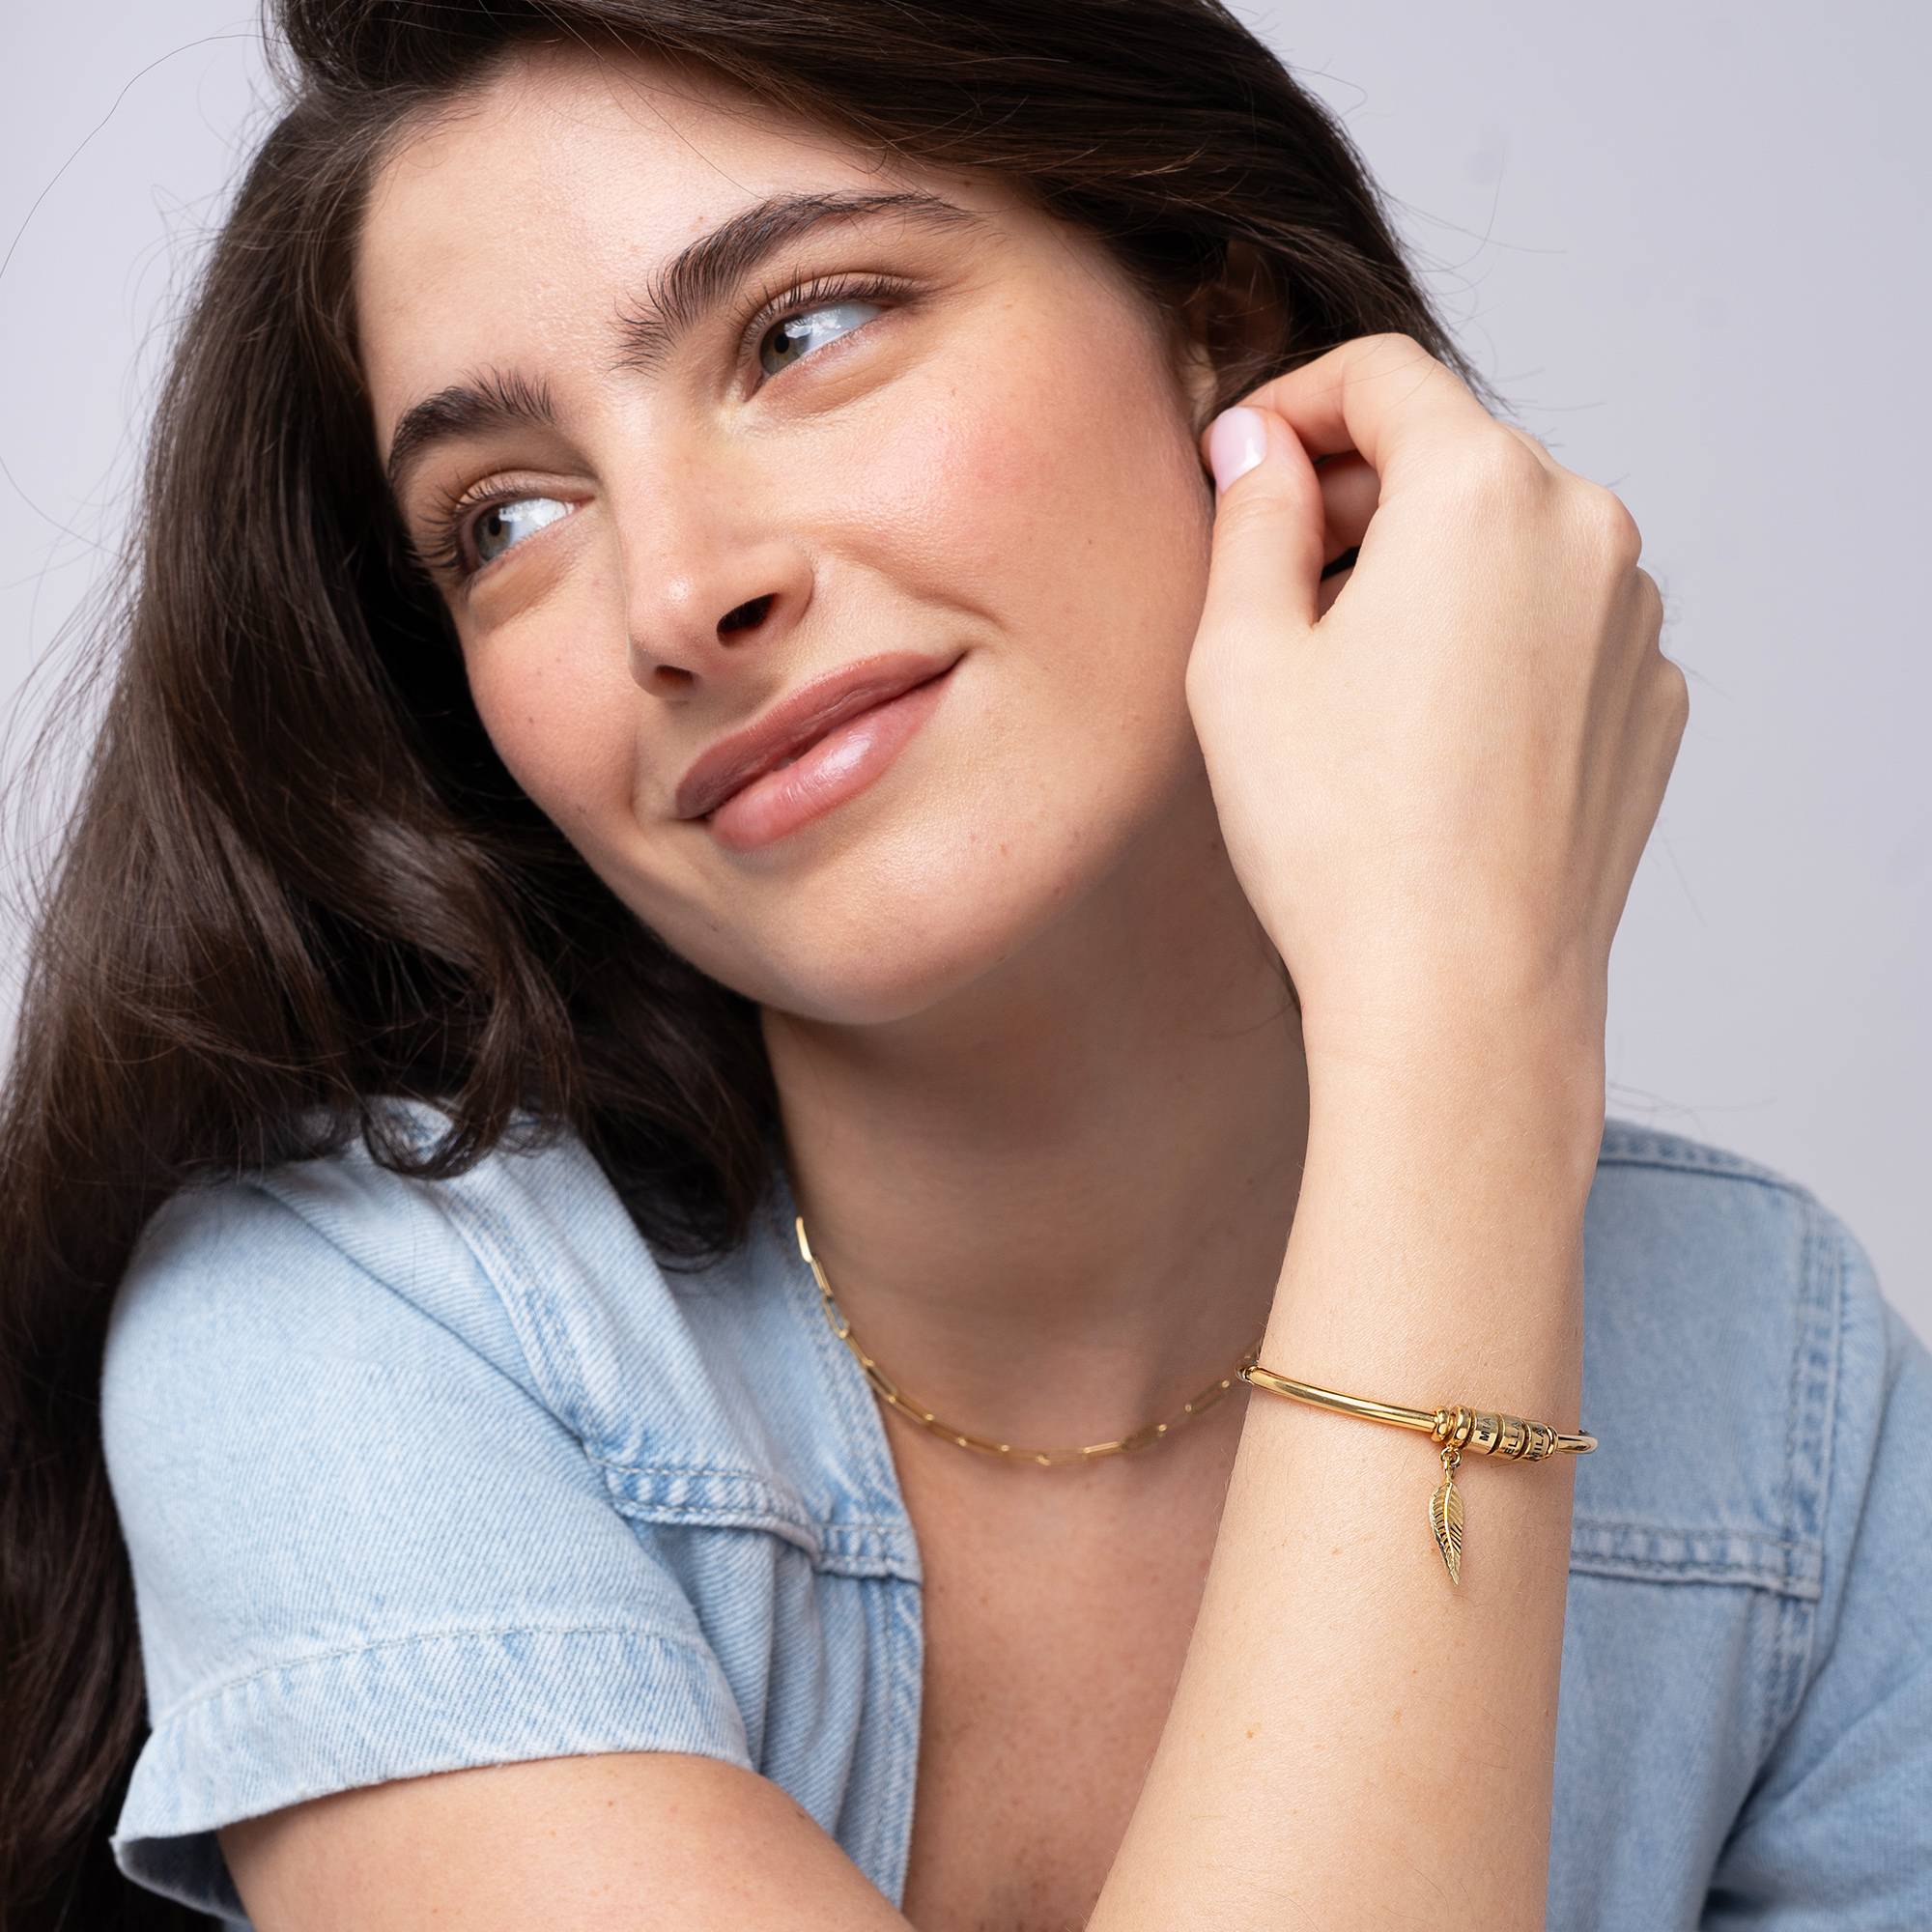 Linda Bangle Bracelet in Gold Vermeil-1 product photo